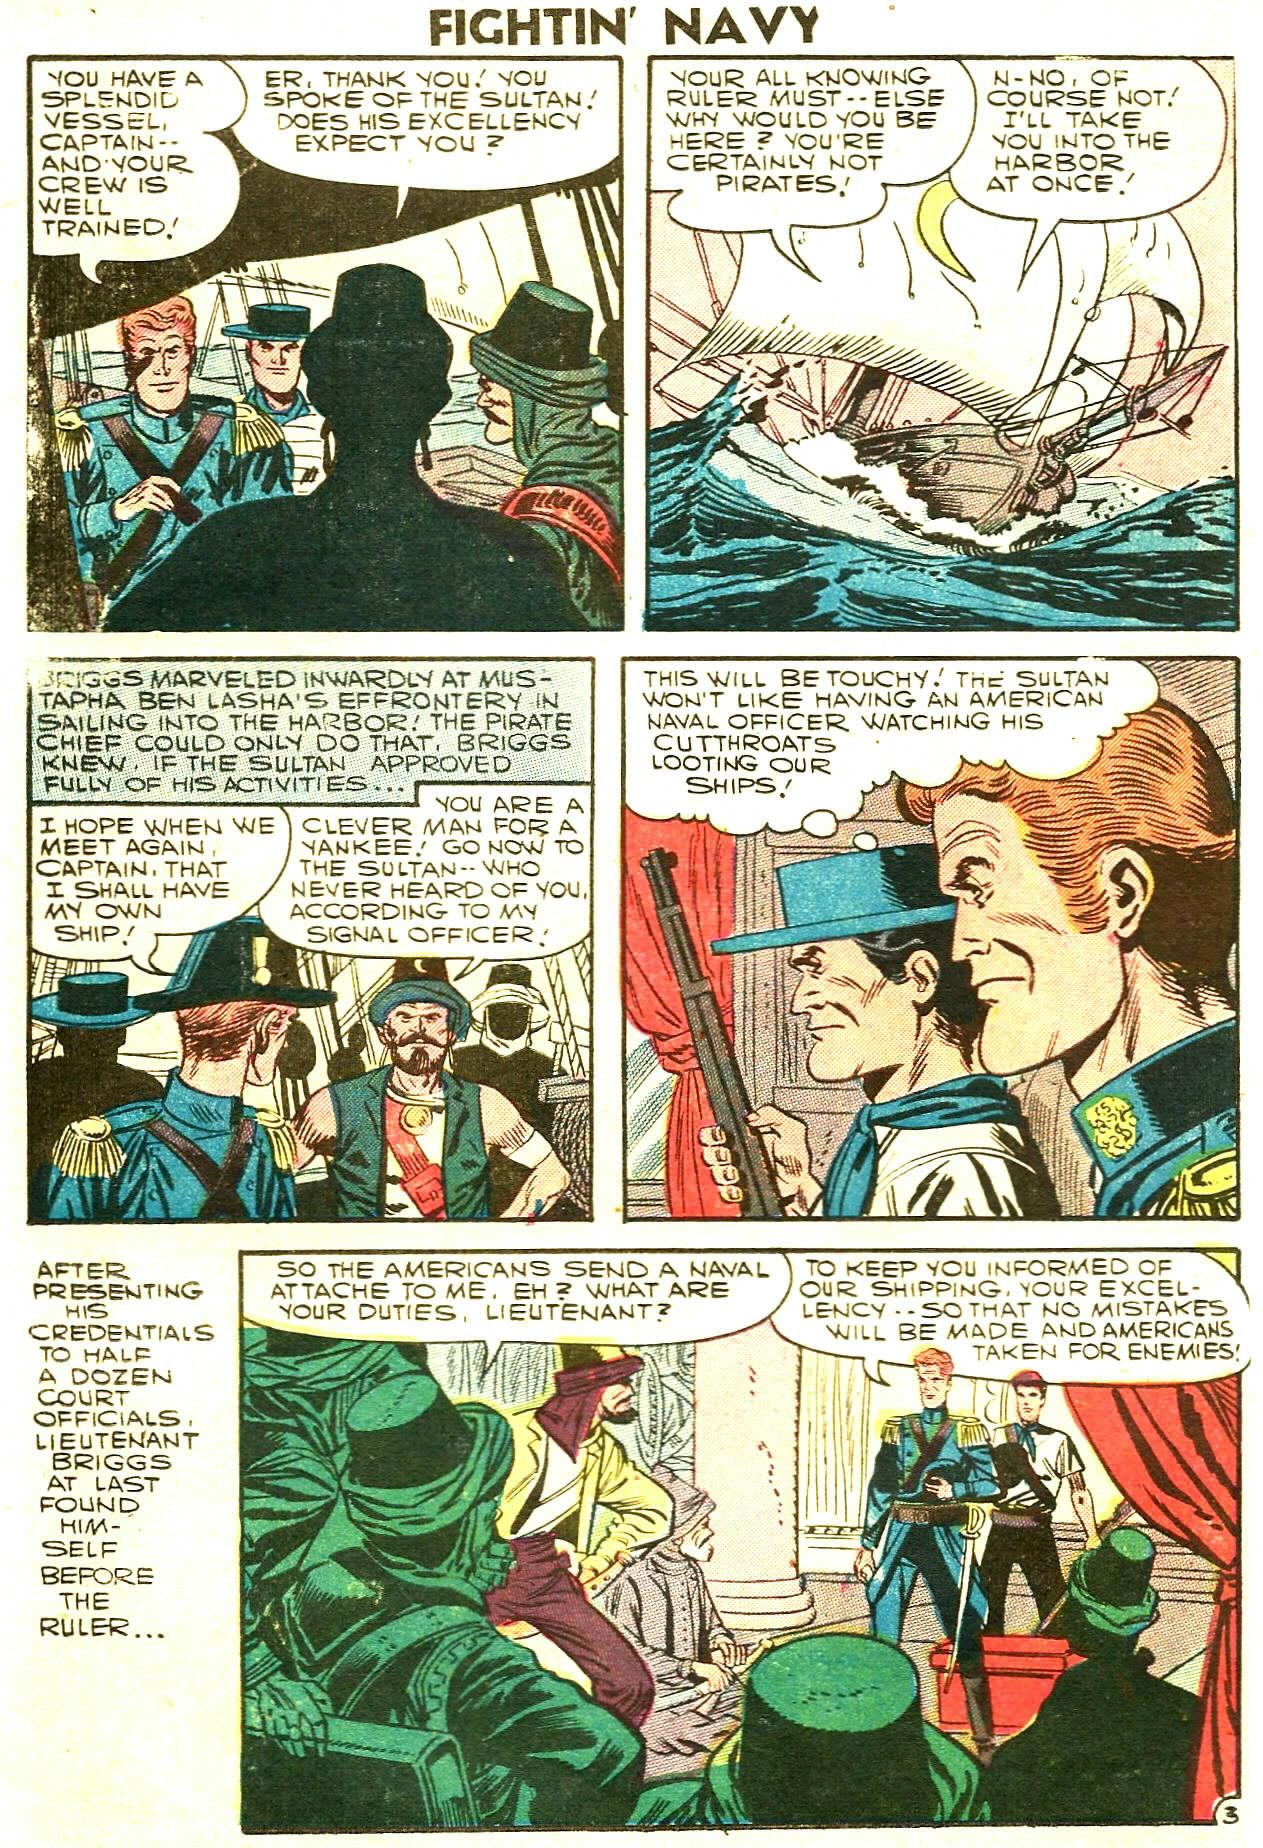 Read online Fightin' Navy comic -  Issue #78 - 26